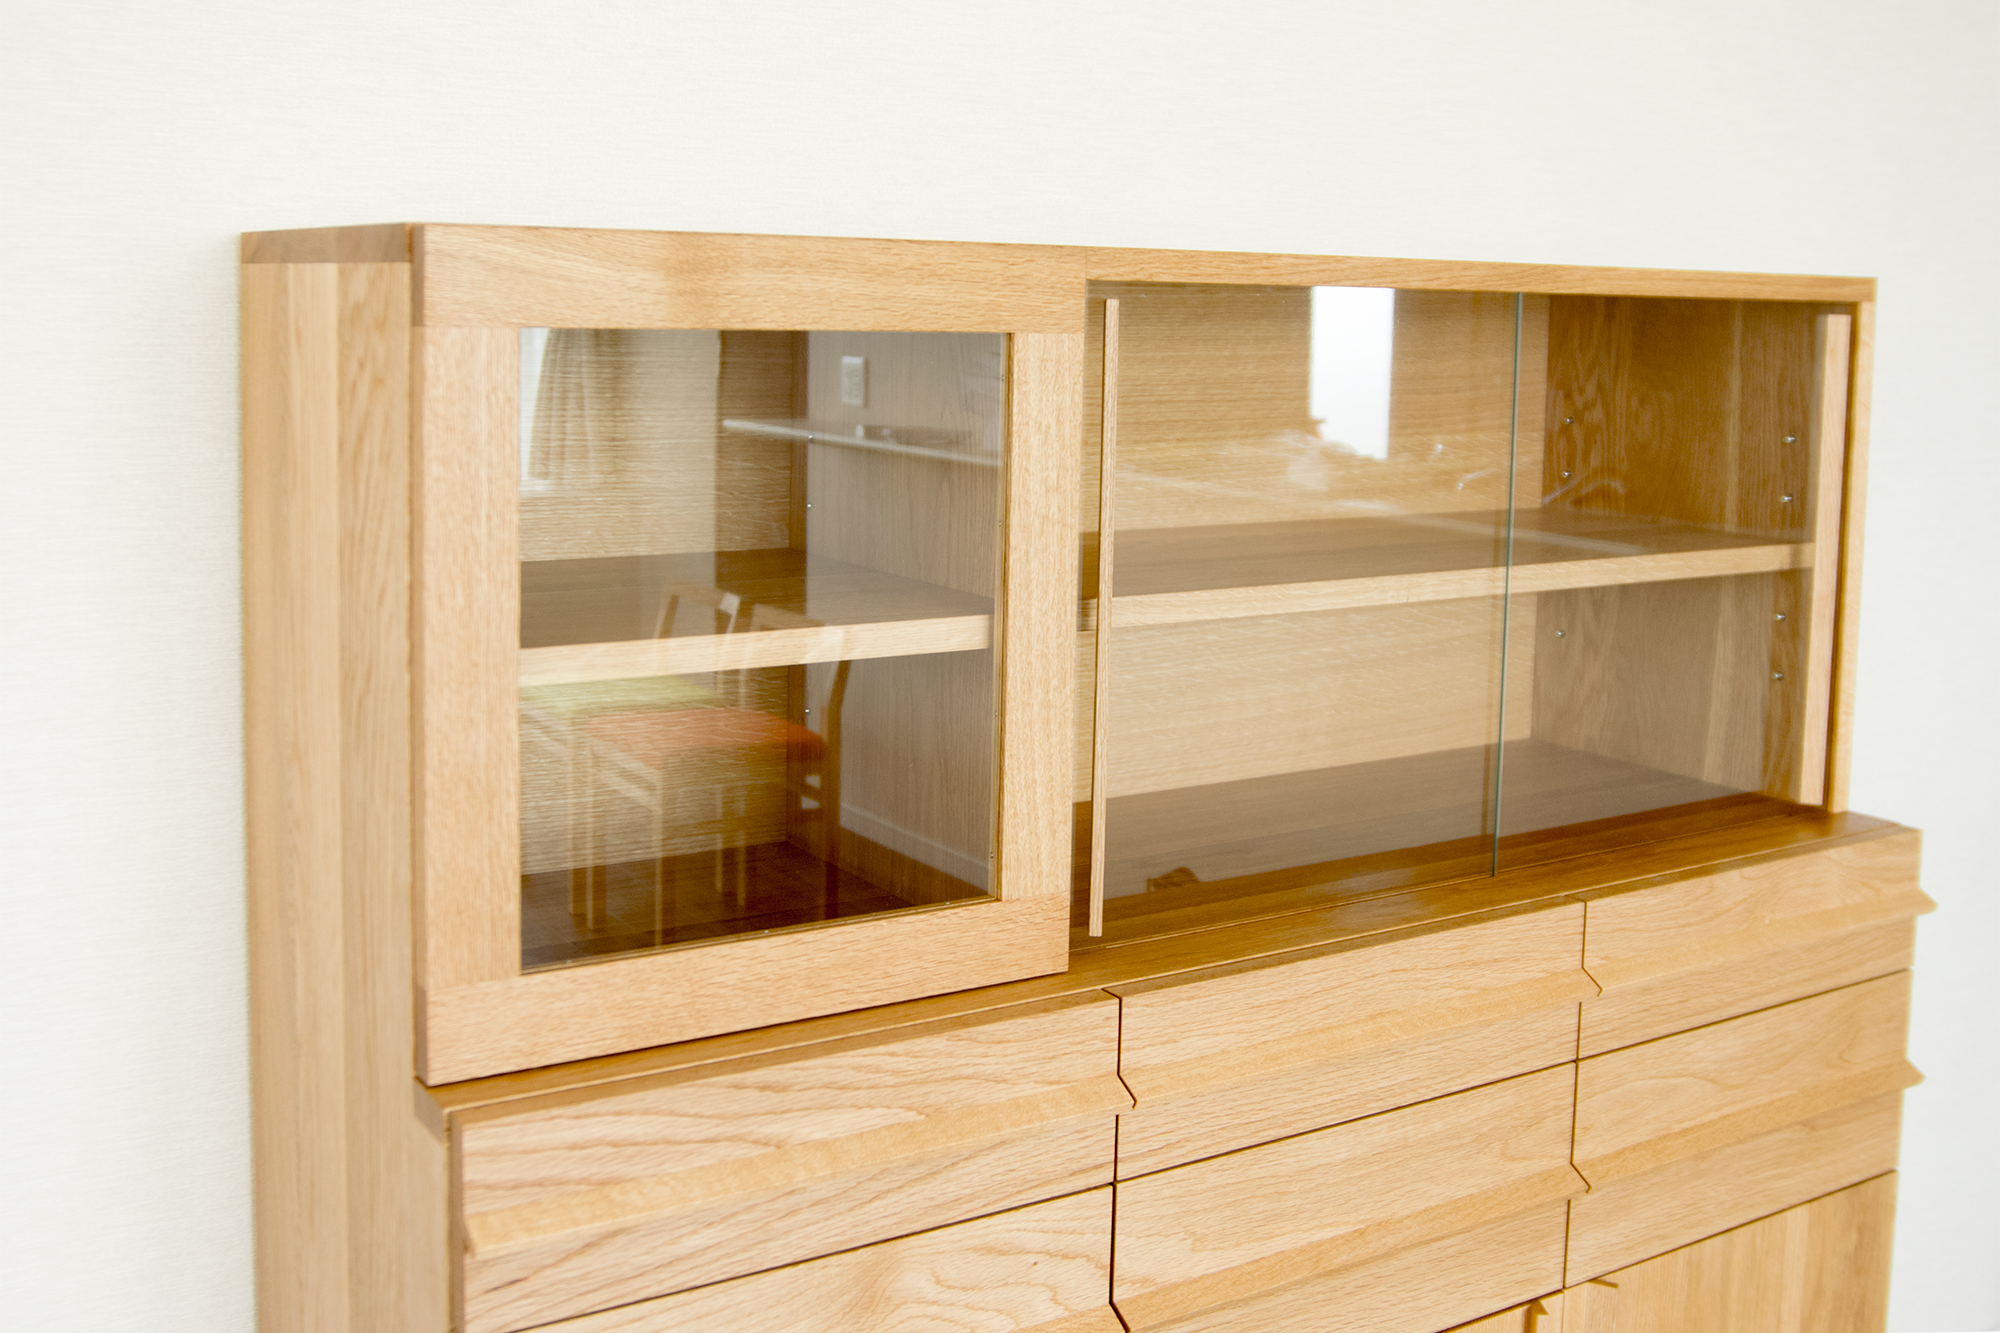 TANA ナラ材の食器棚＋タモ材のピコチェア│オーダー家具と無垢天板